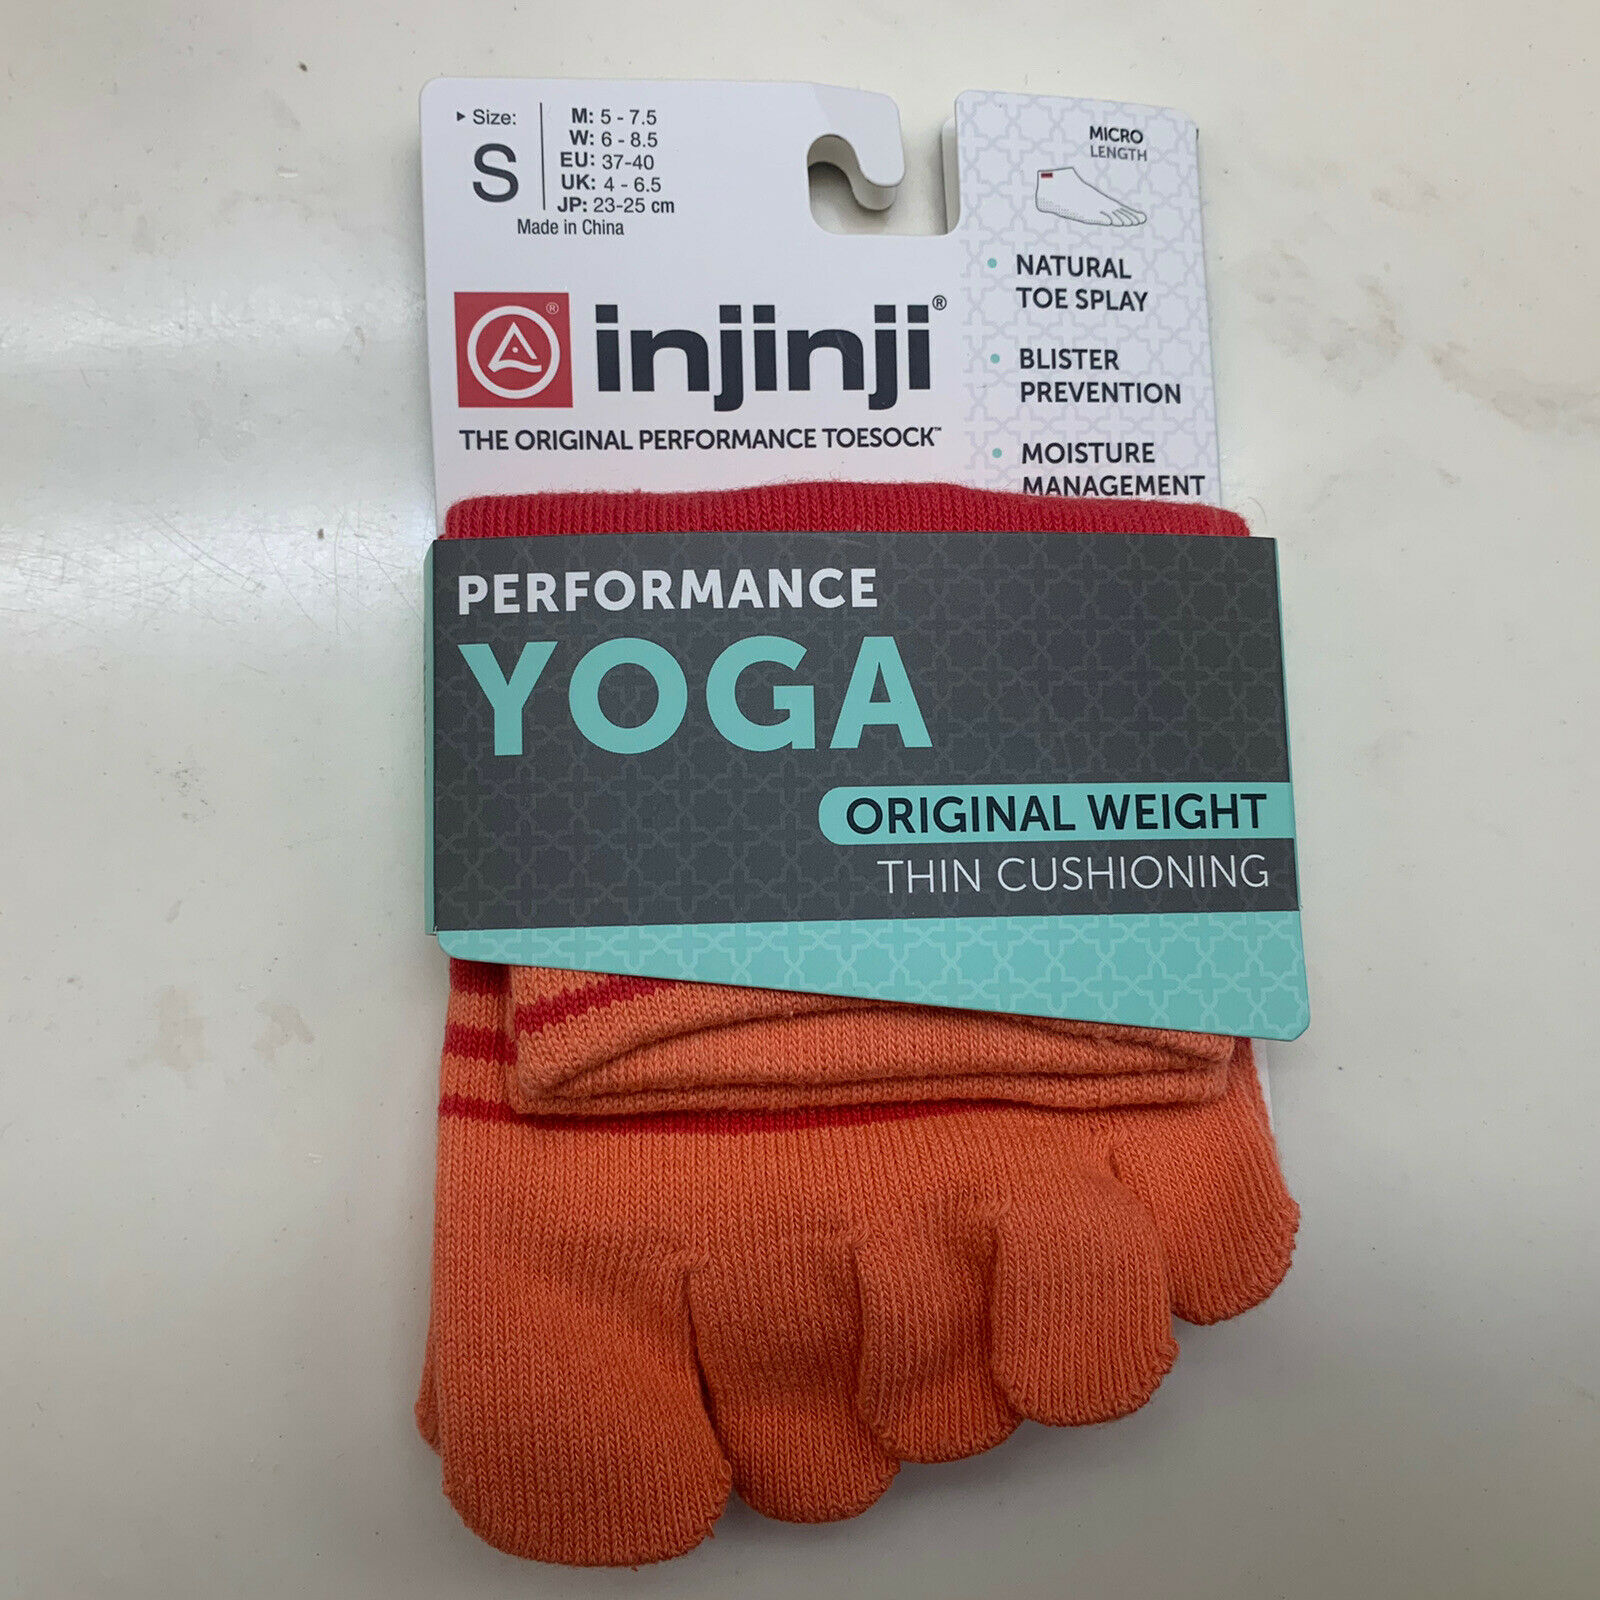 Injinji Unisex Performance Yoga Toesock Micro Length